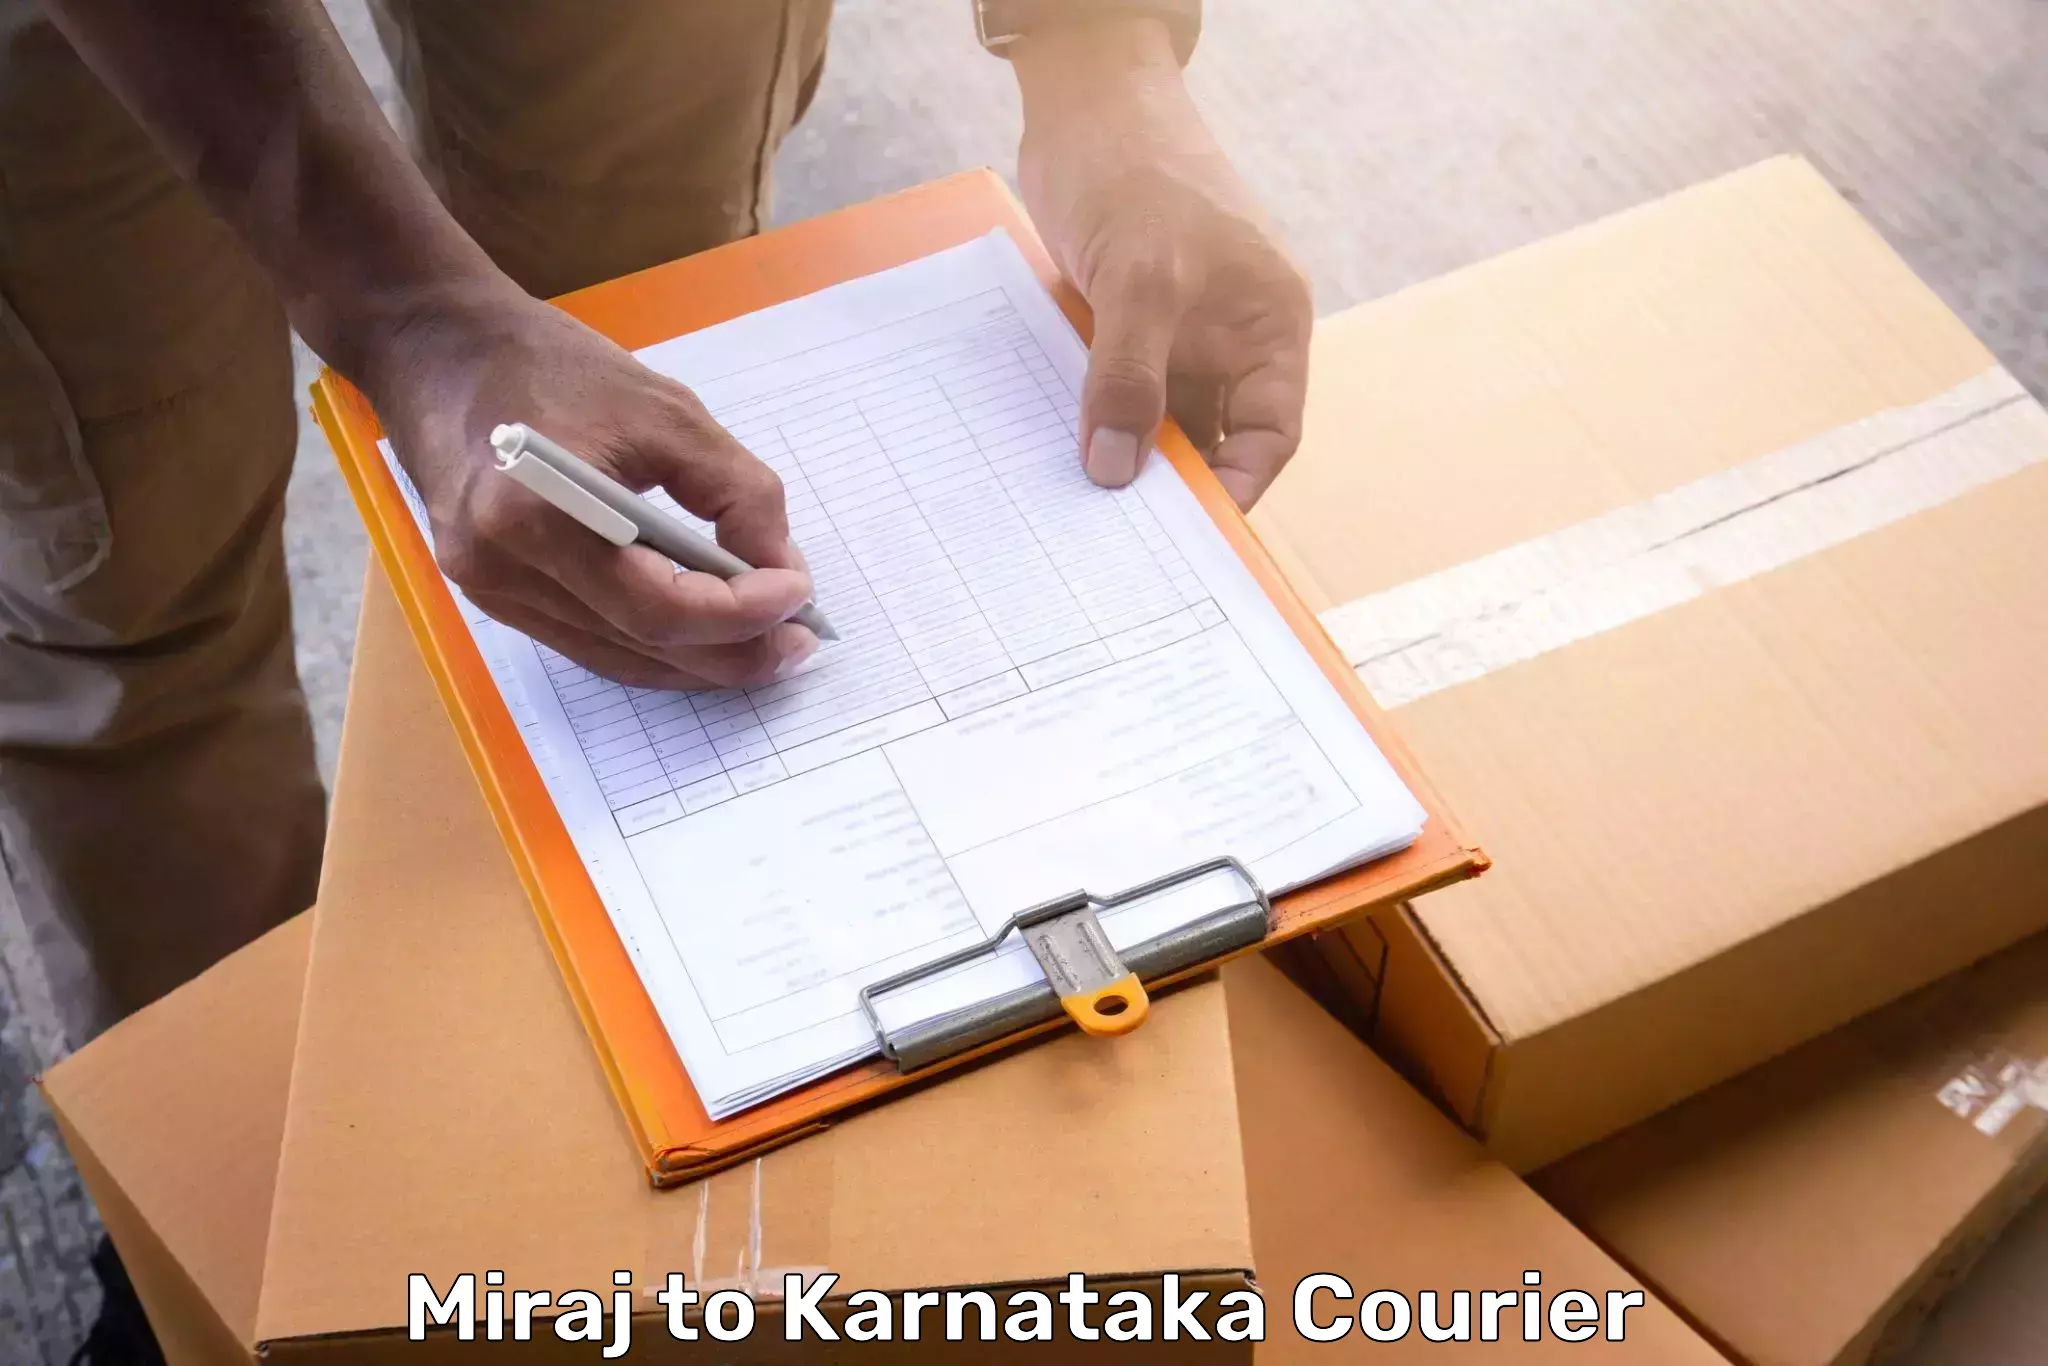 Same day luggage service Miraj to Karnataka